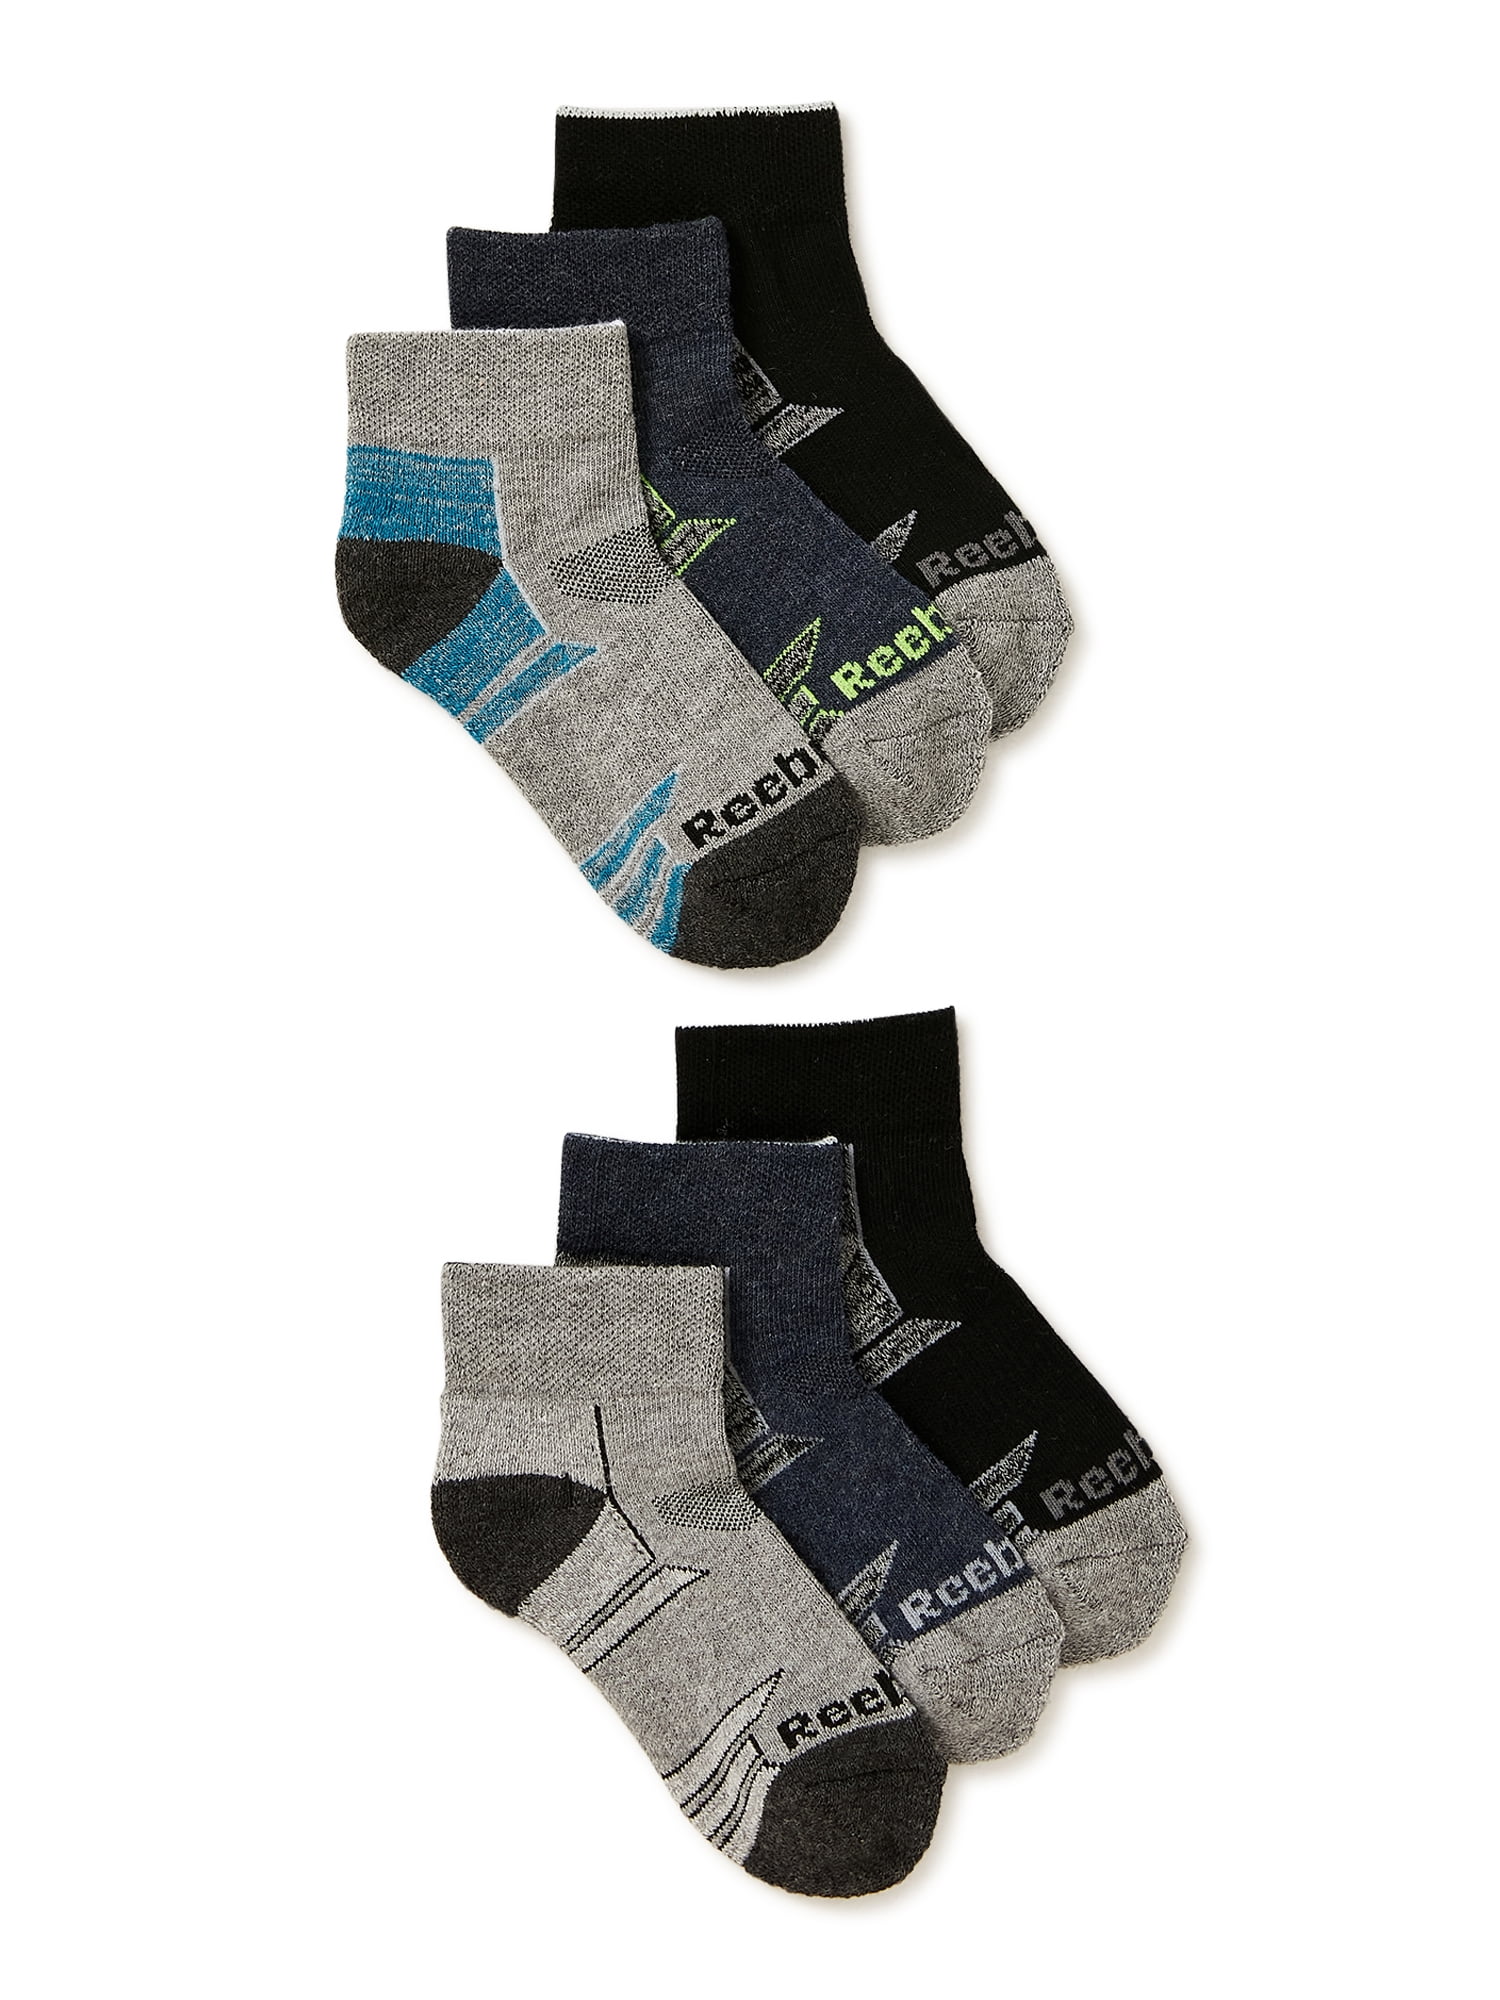 Multicolor Assorted K.Bell Kids Boys' Quarter Socks 12 Pairs L 8668-5